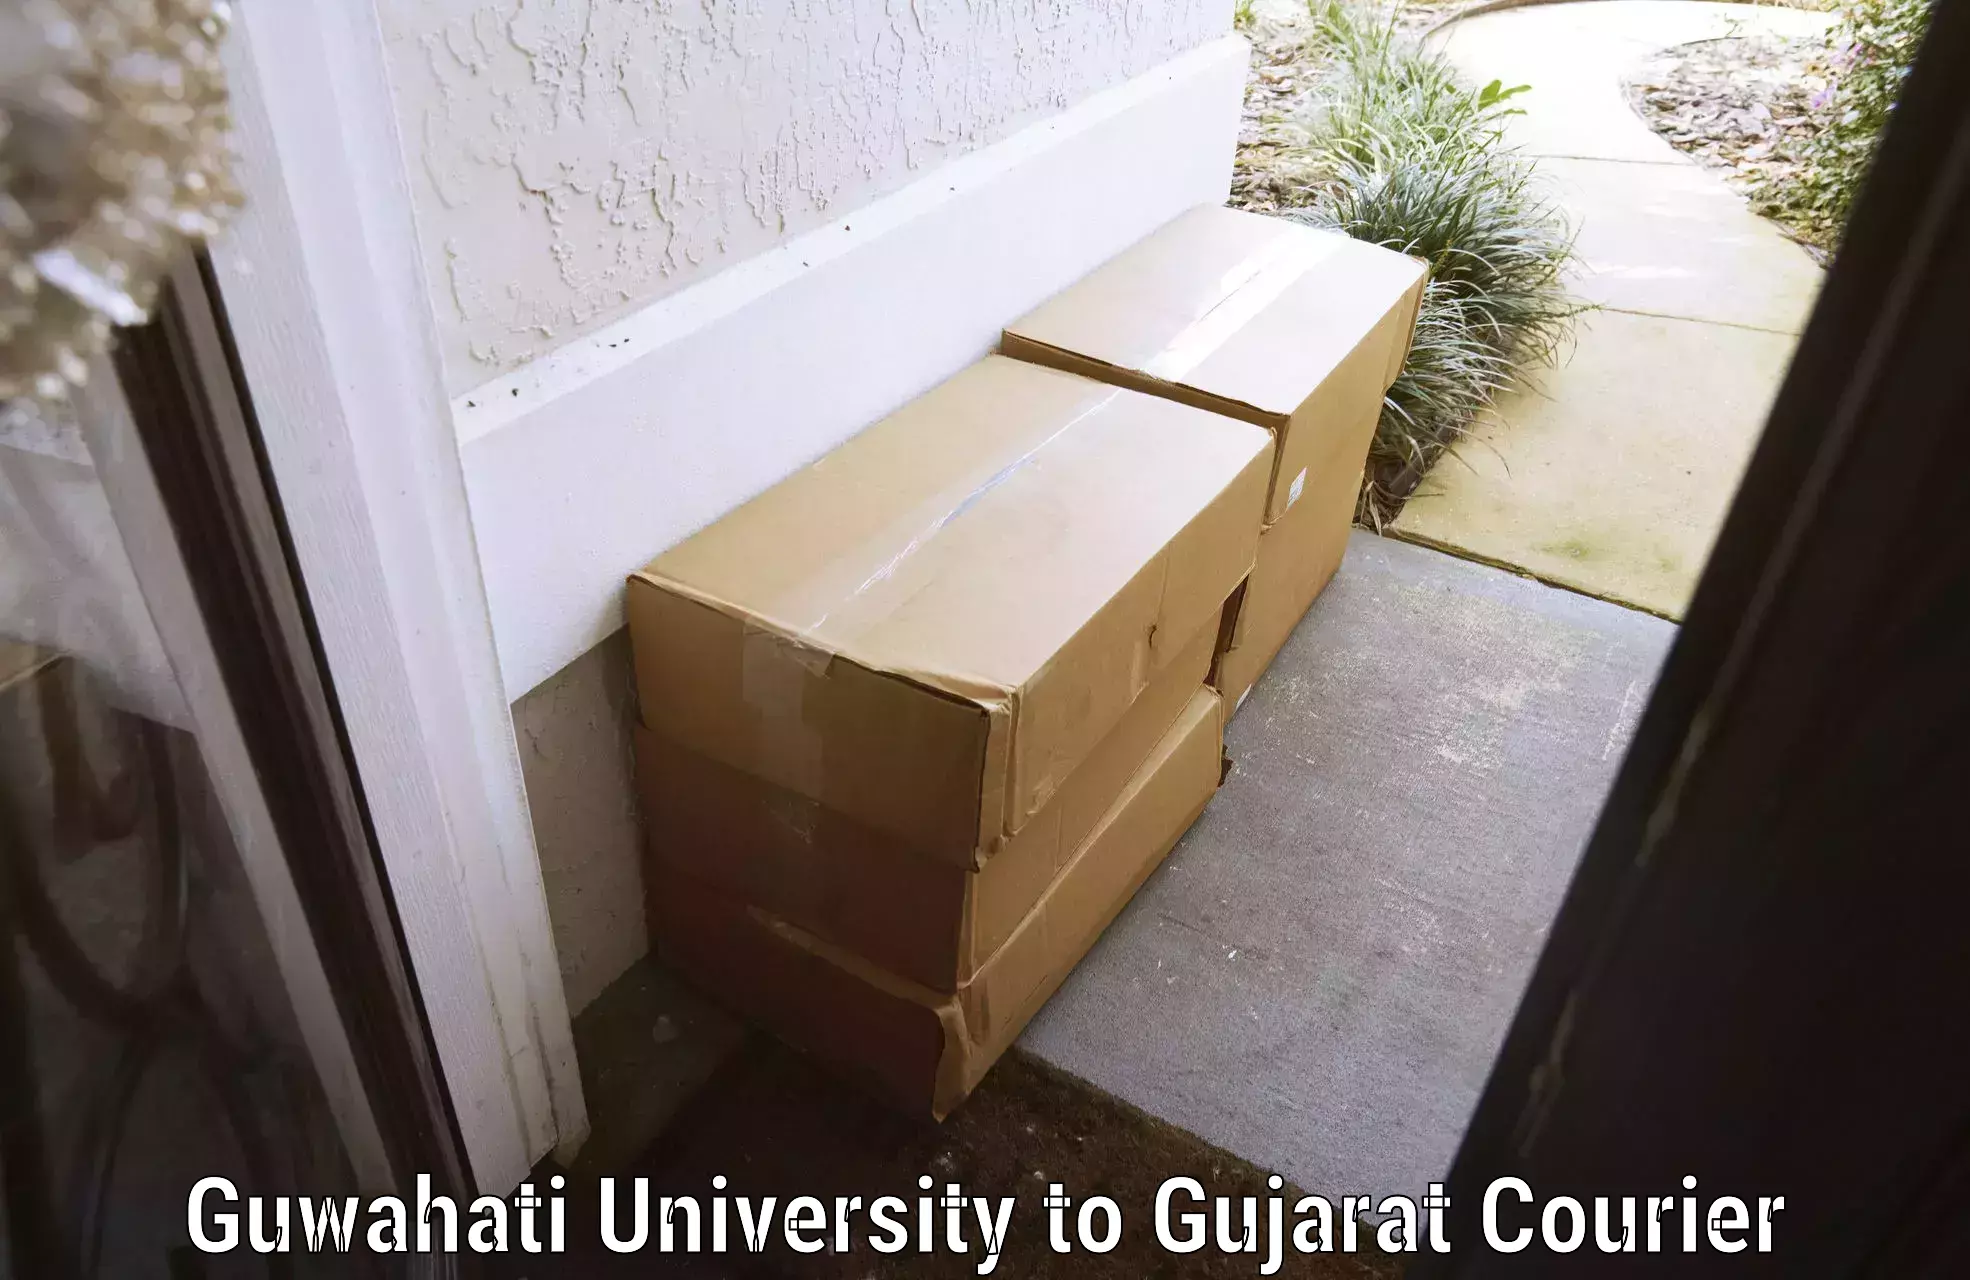 Baggage transport technology Guwahati University to Gujarat